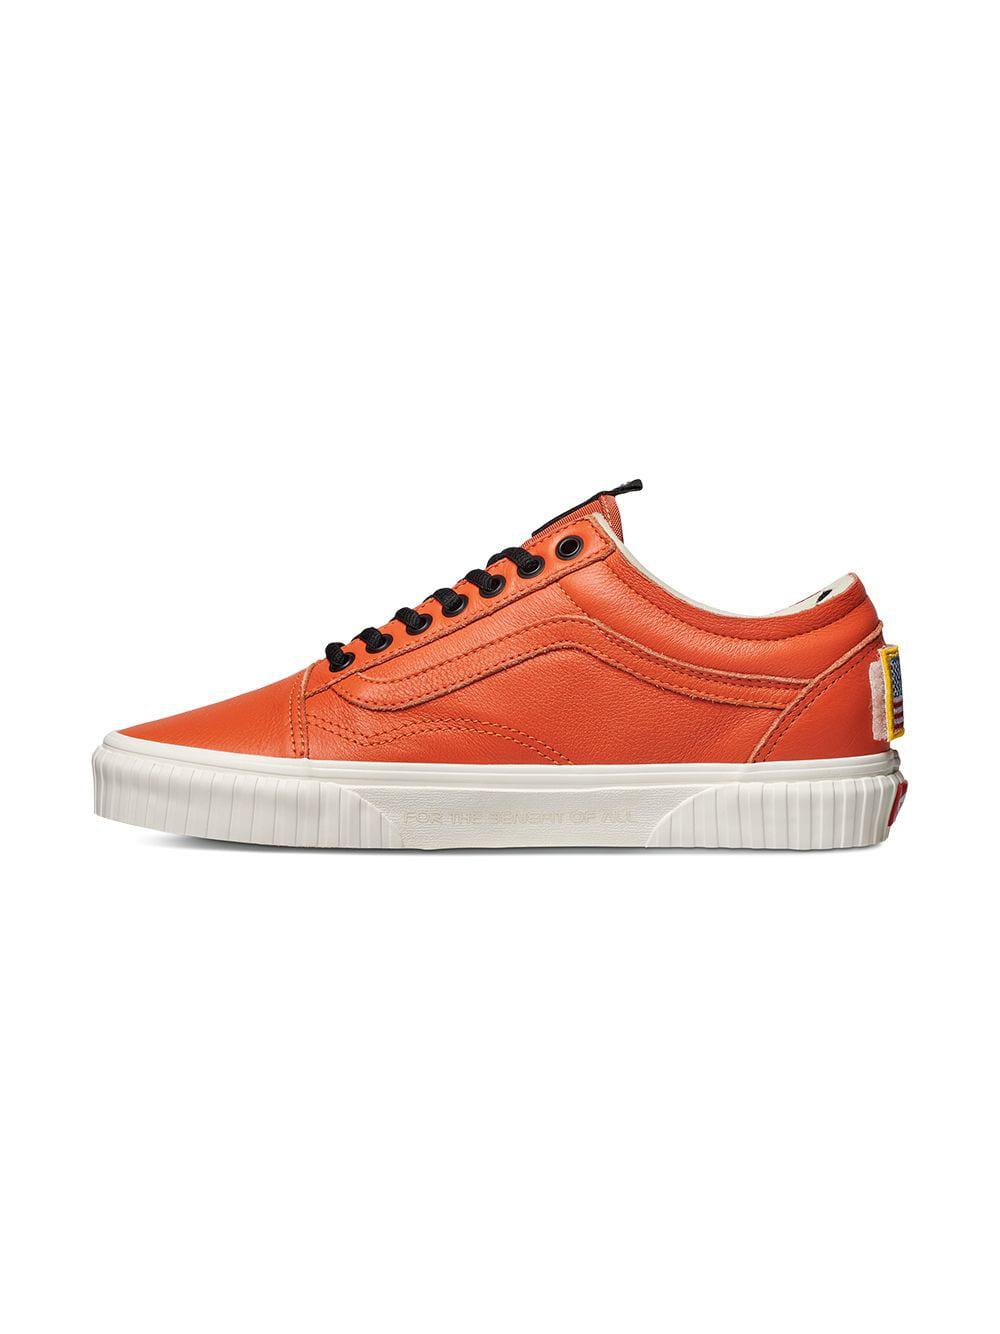 Vans Orange And Black Nasa Old Space Voyager Firecracker Sneakers for Men | Lyst